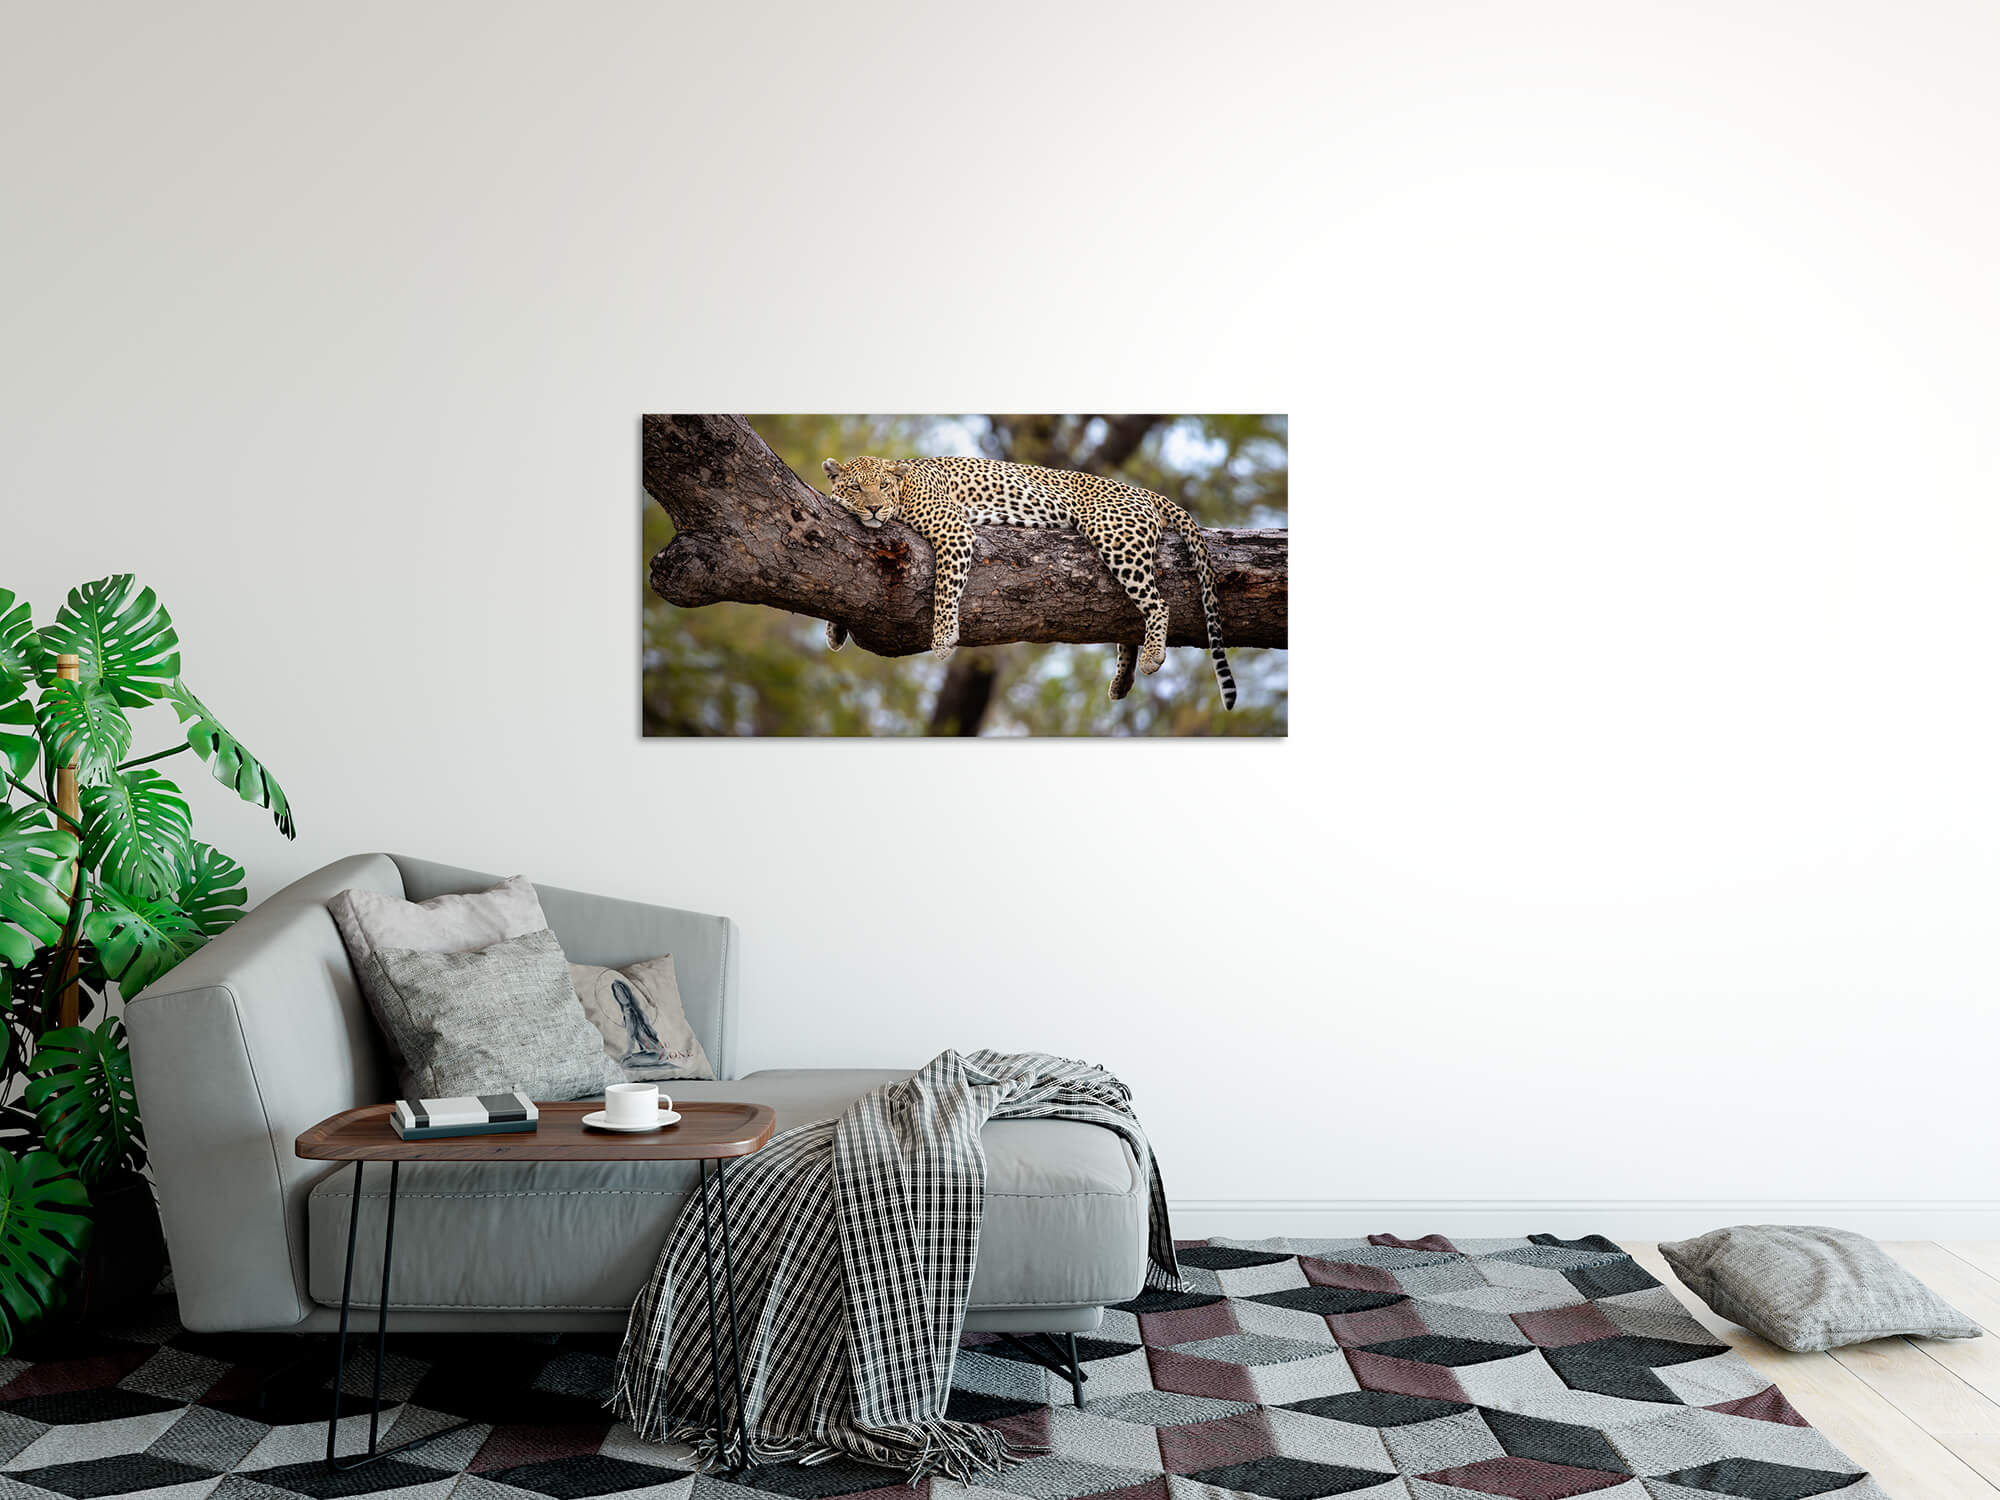 Leinwandbild 120x60cm Leopard döst im Afrika | - zu Art Baum Geschenke , Preisen Wandbilder Raubkatze & Einzigartige Designs, Wohnaccessoires Wildnis fairen Großkatze GmbH Sinus